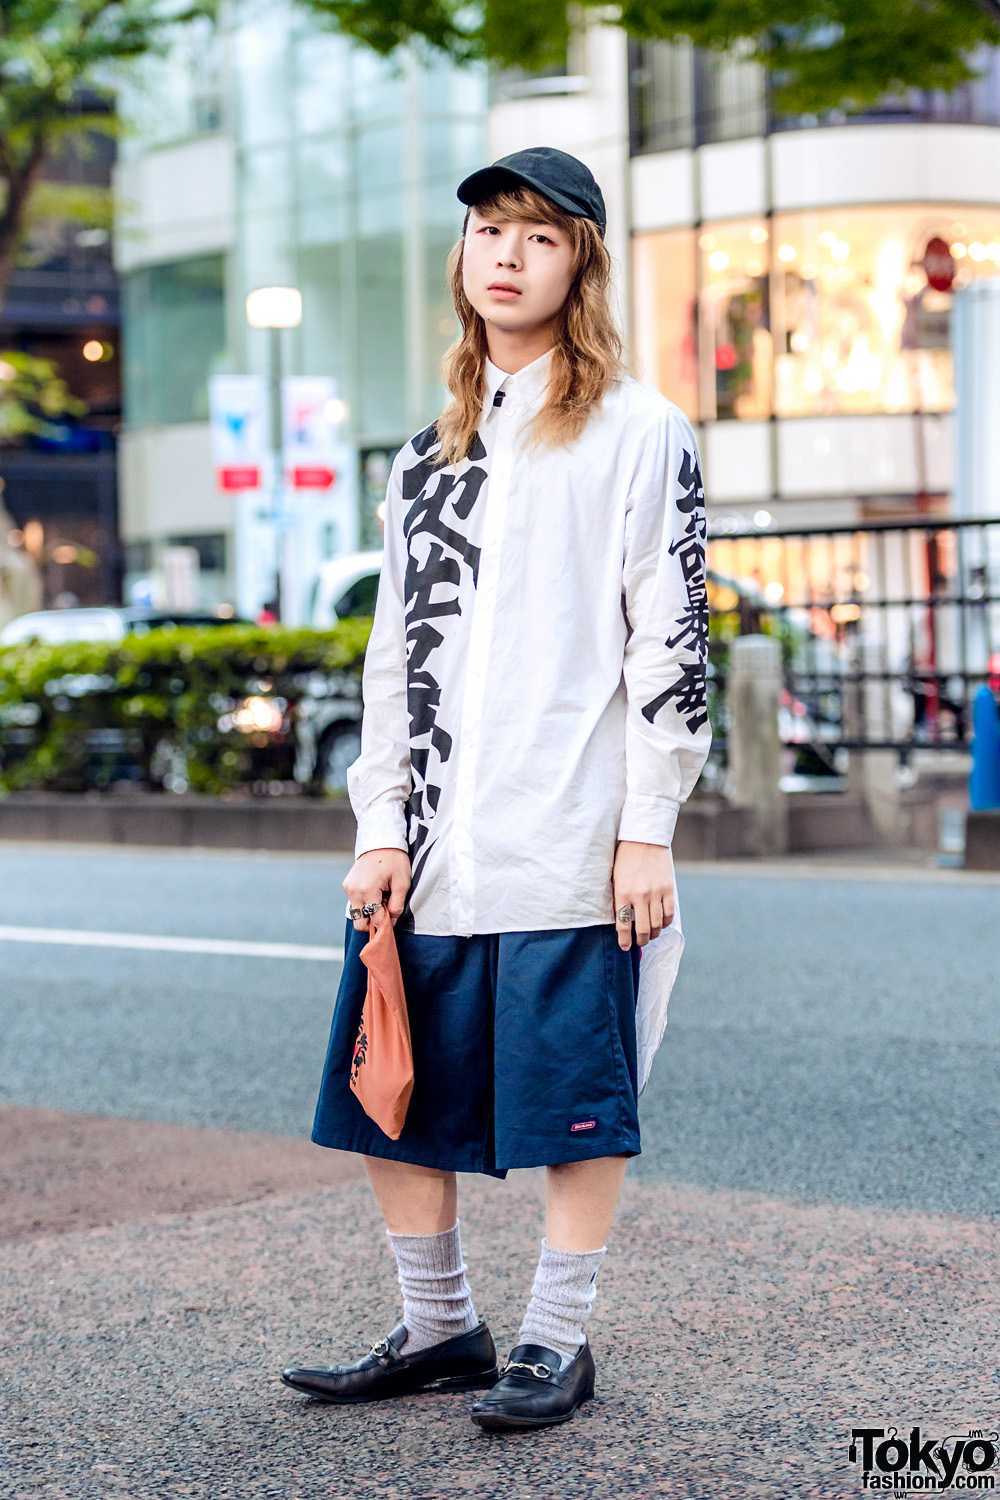 Fashion College Student in Monochrome Streetwear w/ Kansai